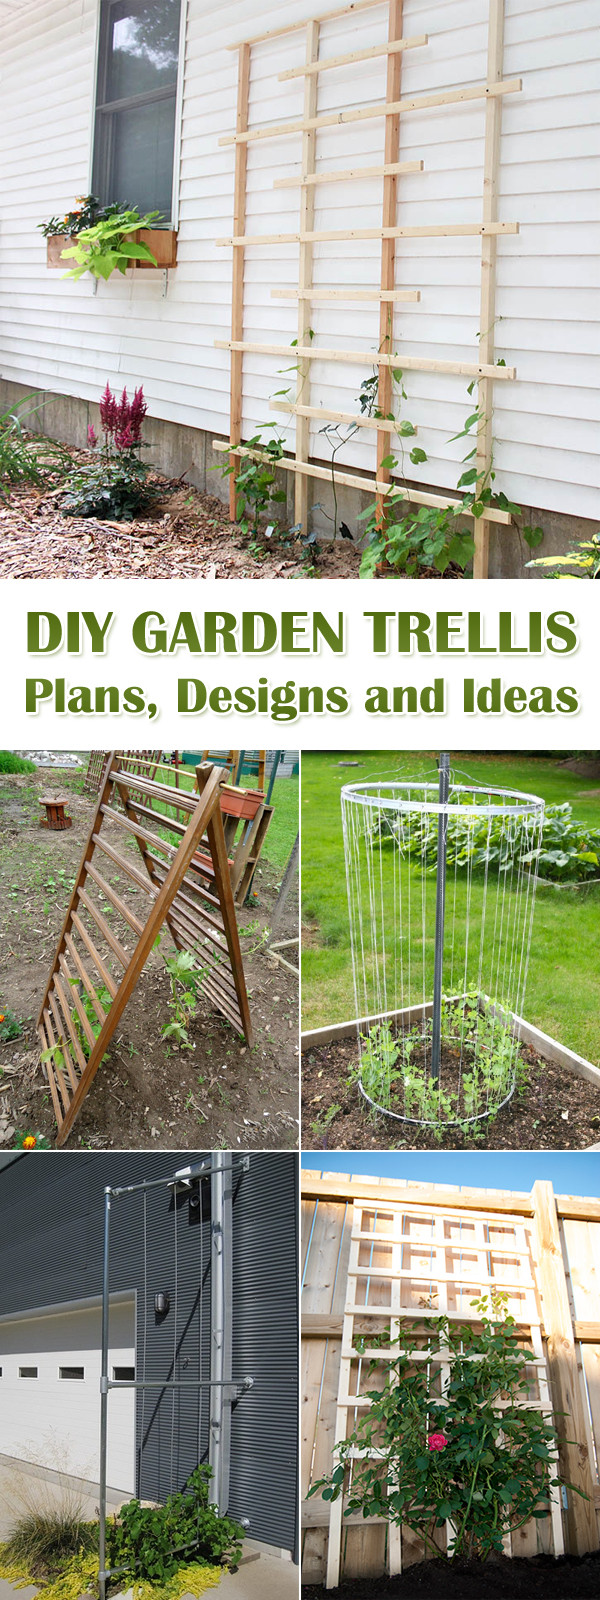 Trellis Plans DIY
 12 DIY Garden Trellis Plans Designs and Ideas